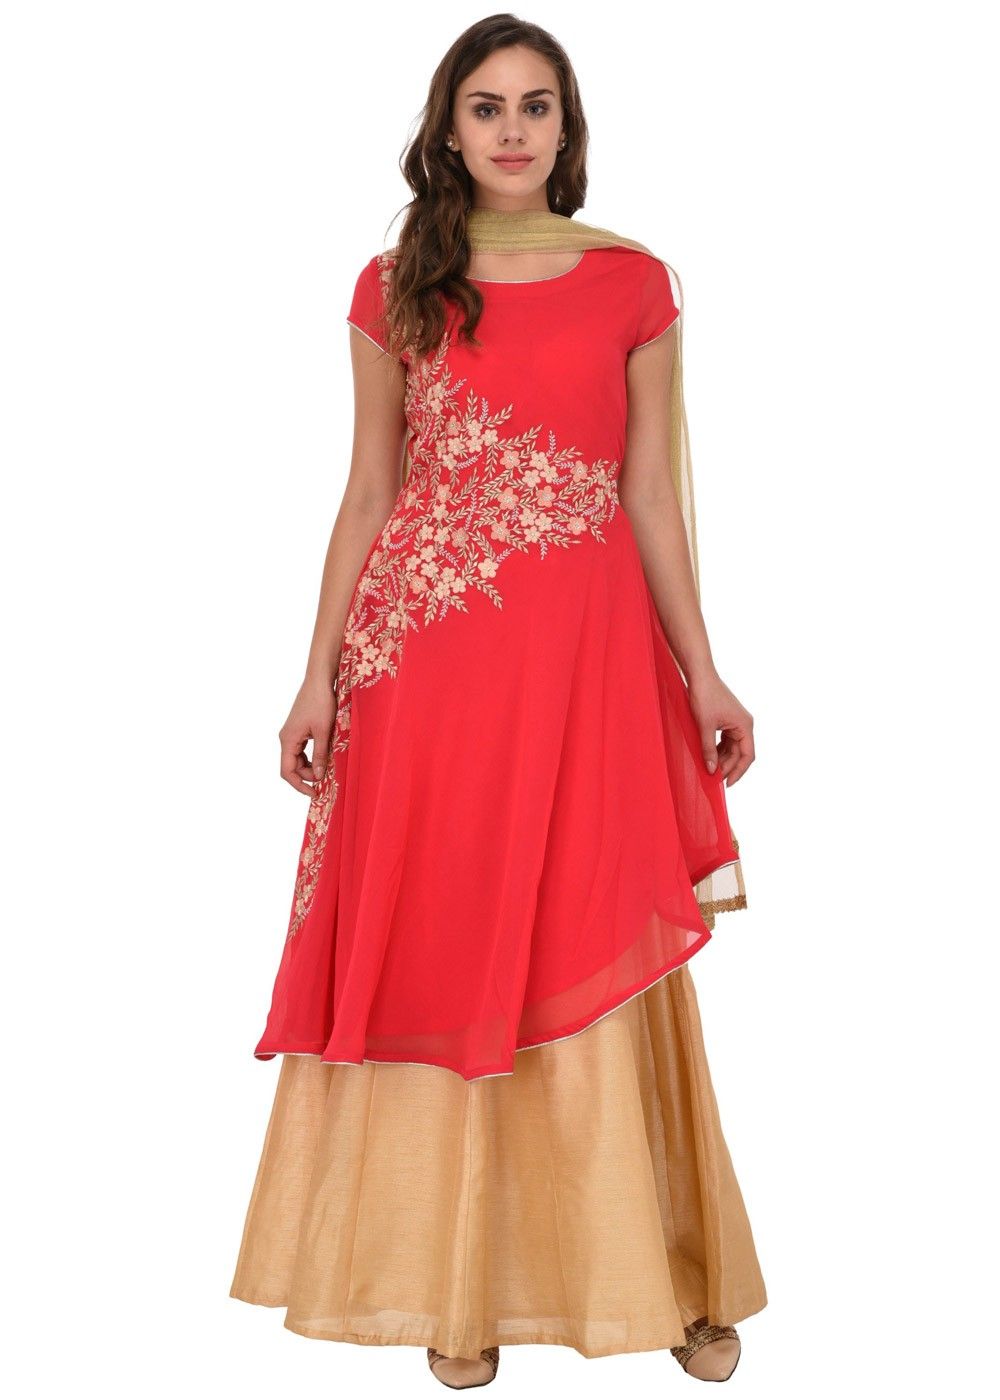 Flipkart Indo Western Outfit Haul | Amazon Skirt/Tops/Plazzo/Kurta/Sharara  Set Haul | Flipkart Haul - YouTube